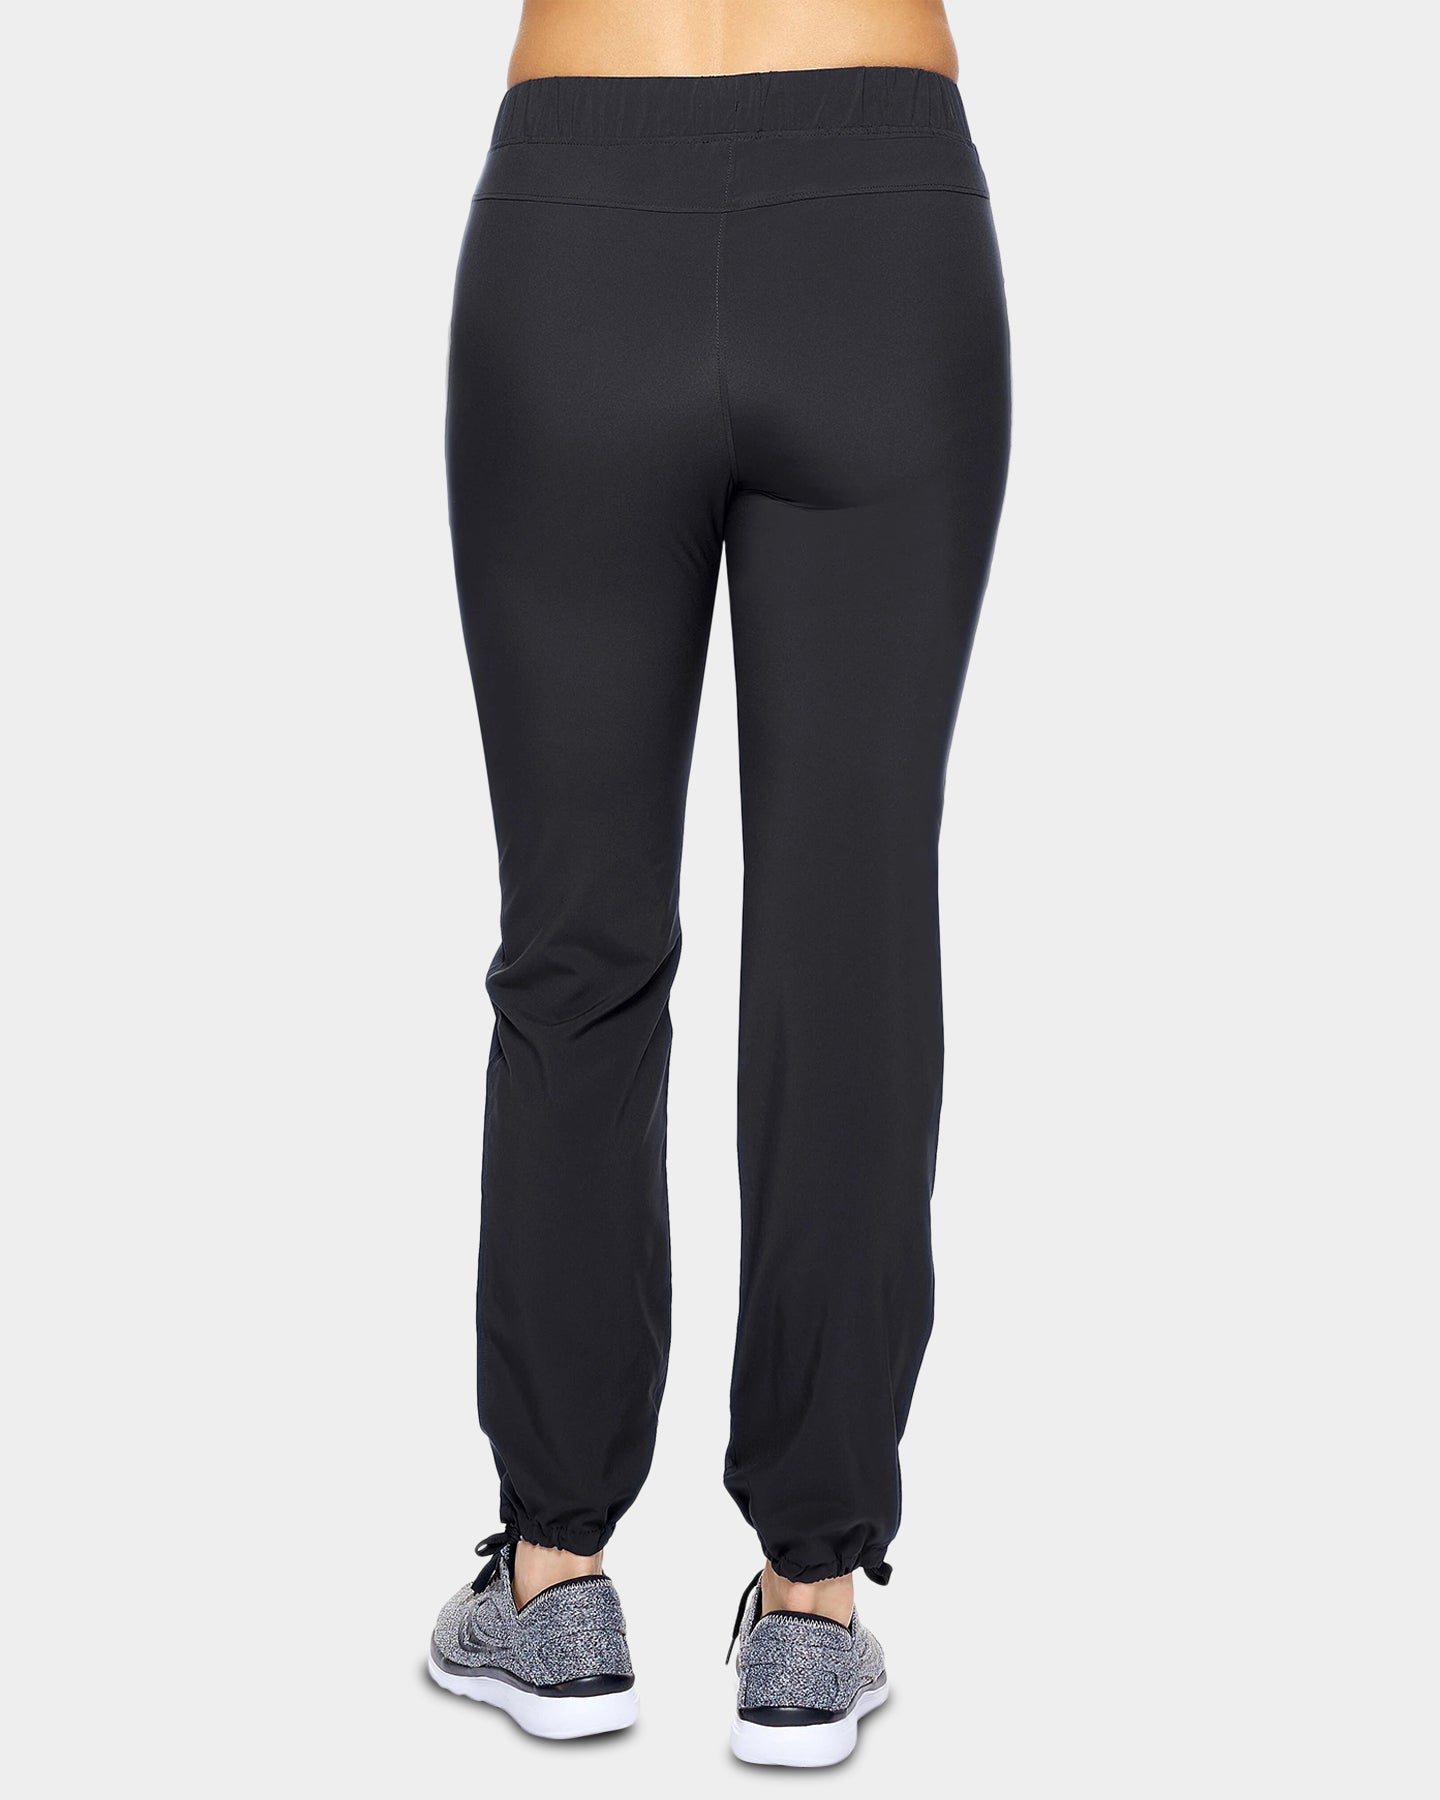 Expert Brand Women's Peformance Phantom Pants, S, Black A3